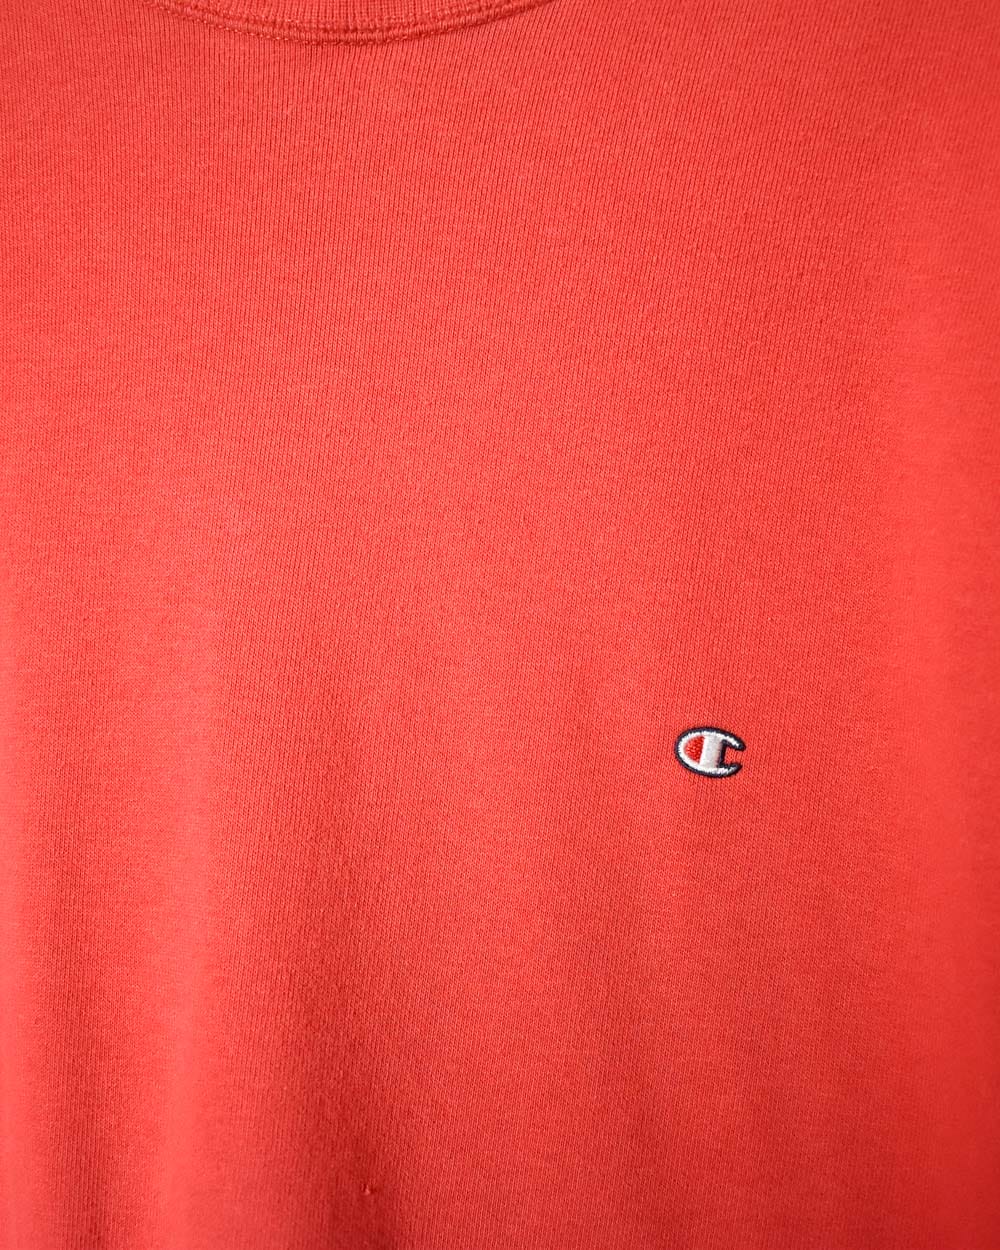 Red Champion Sweatshirt - XX-Large